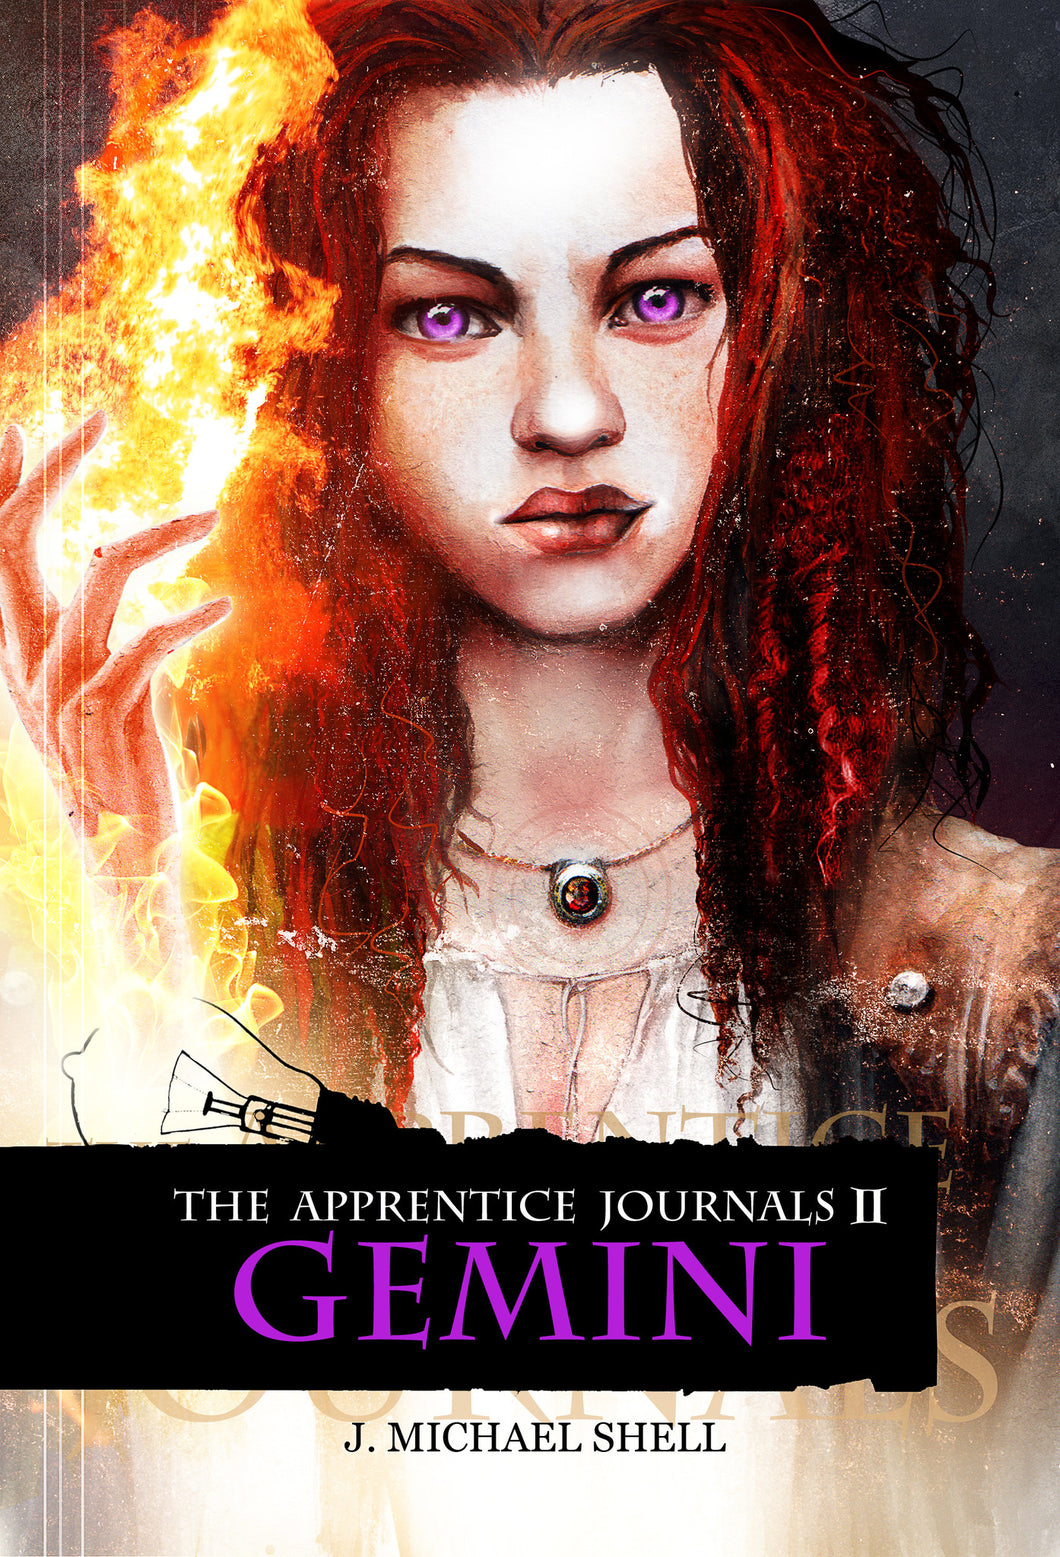 The Apprentice Journals II: Gemini